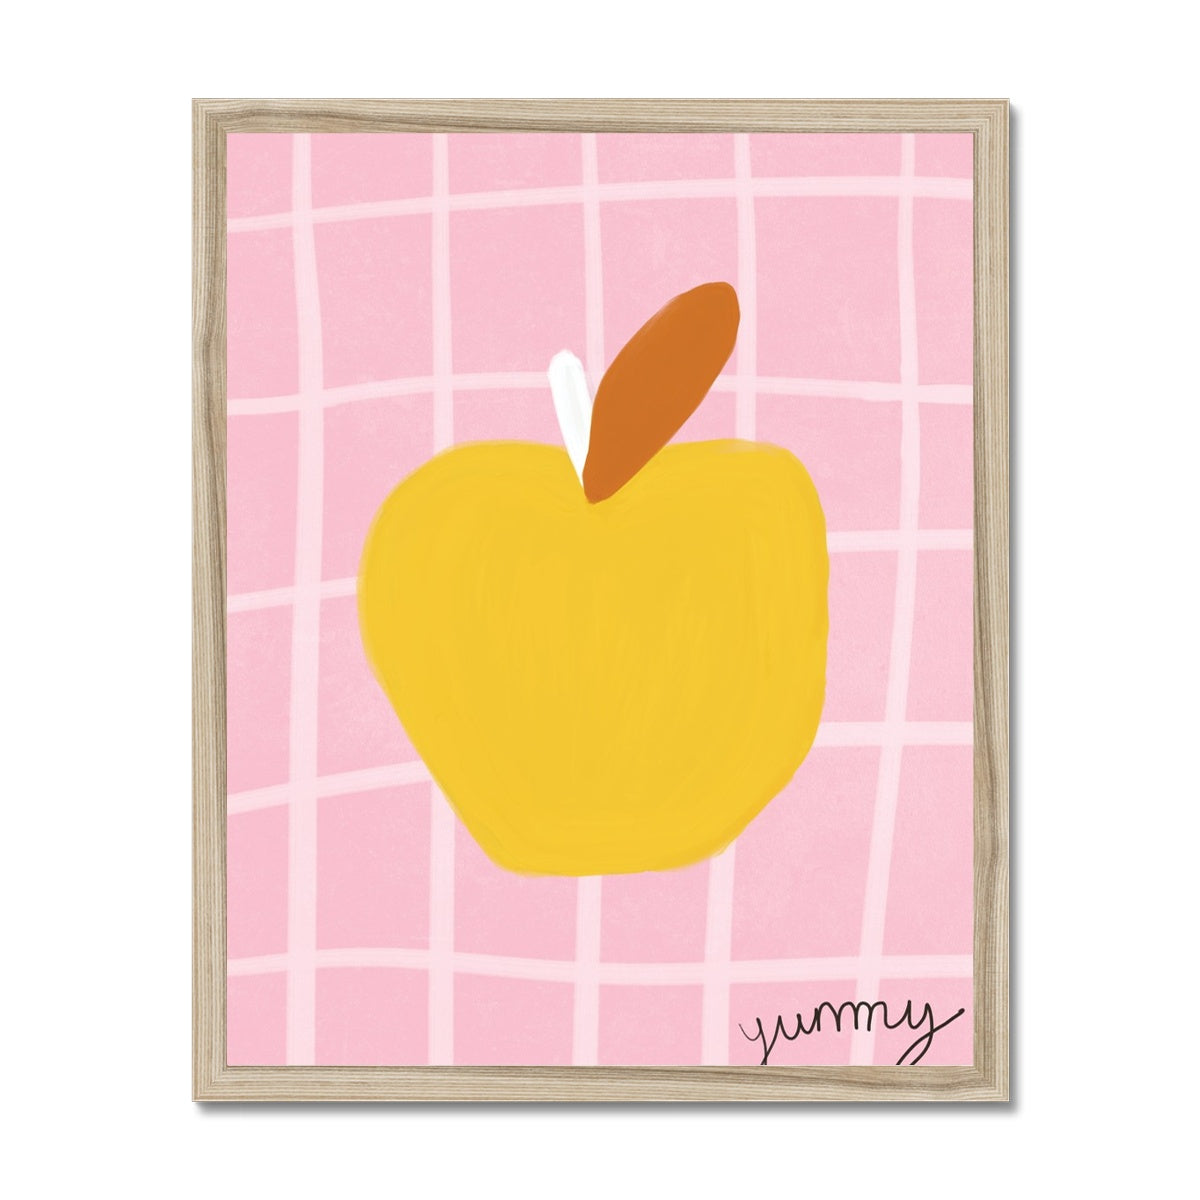 Yummy Apple Print - Pink, Yellow Framed Print